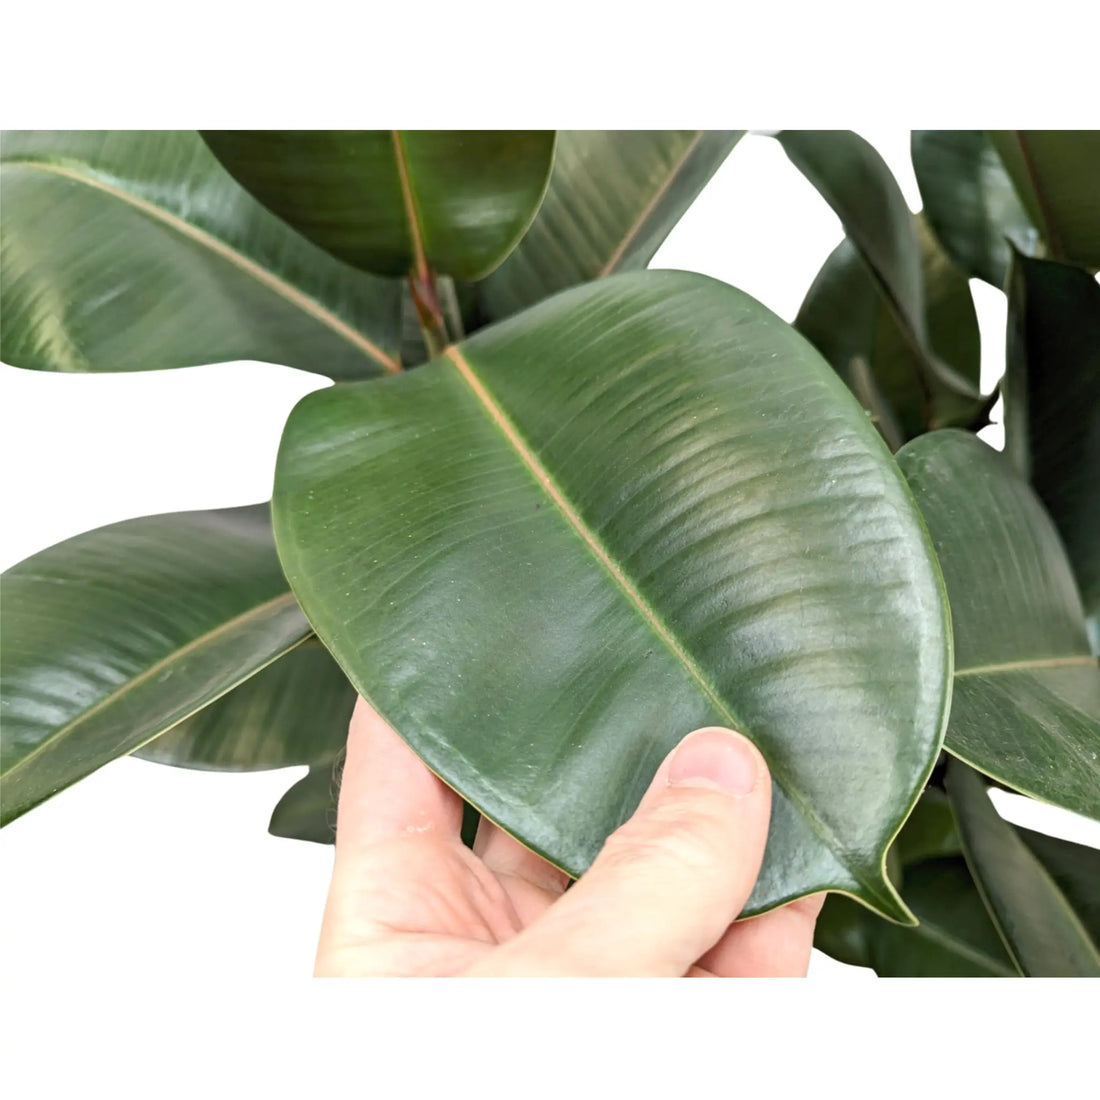 Ficus robusta - Rubber Plant Oz